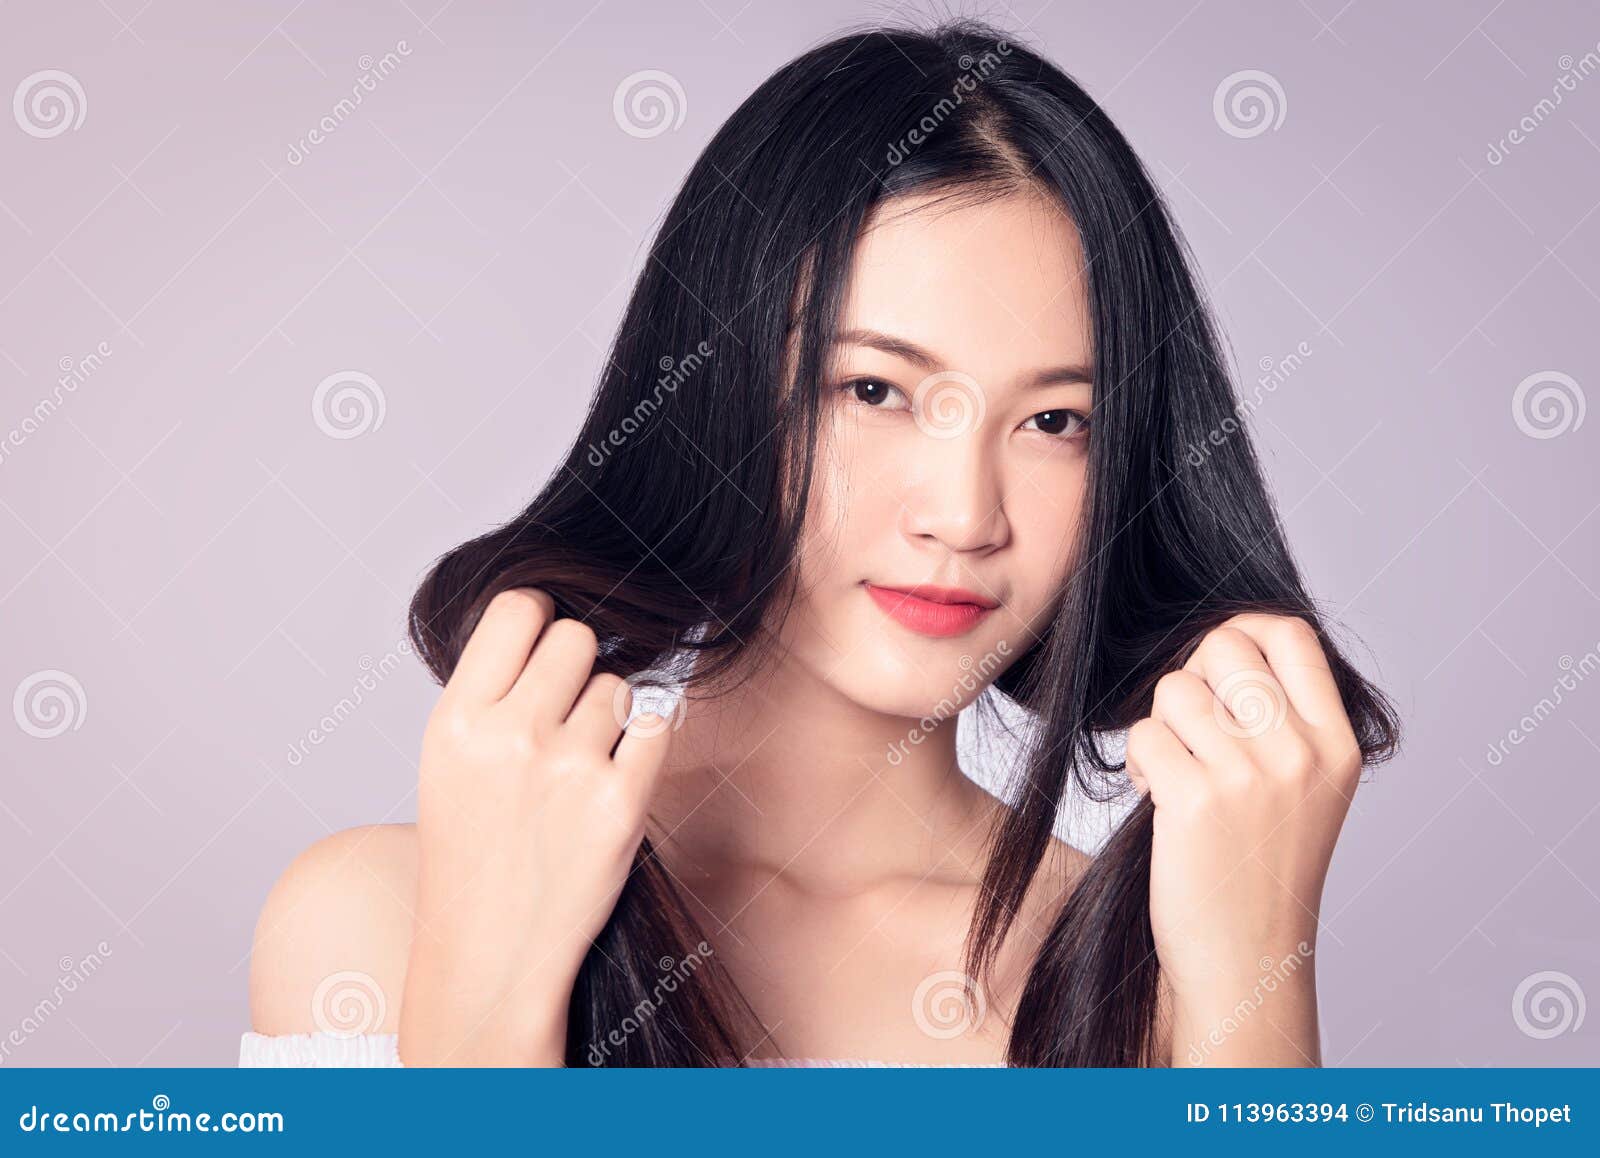 https://thumbs.dreamstime.com/z/model-holding-hair-beautiful-thai-model-isolated-white-background-113963394.jpg